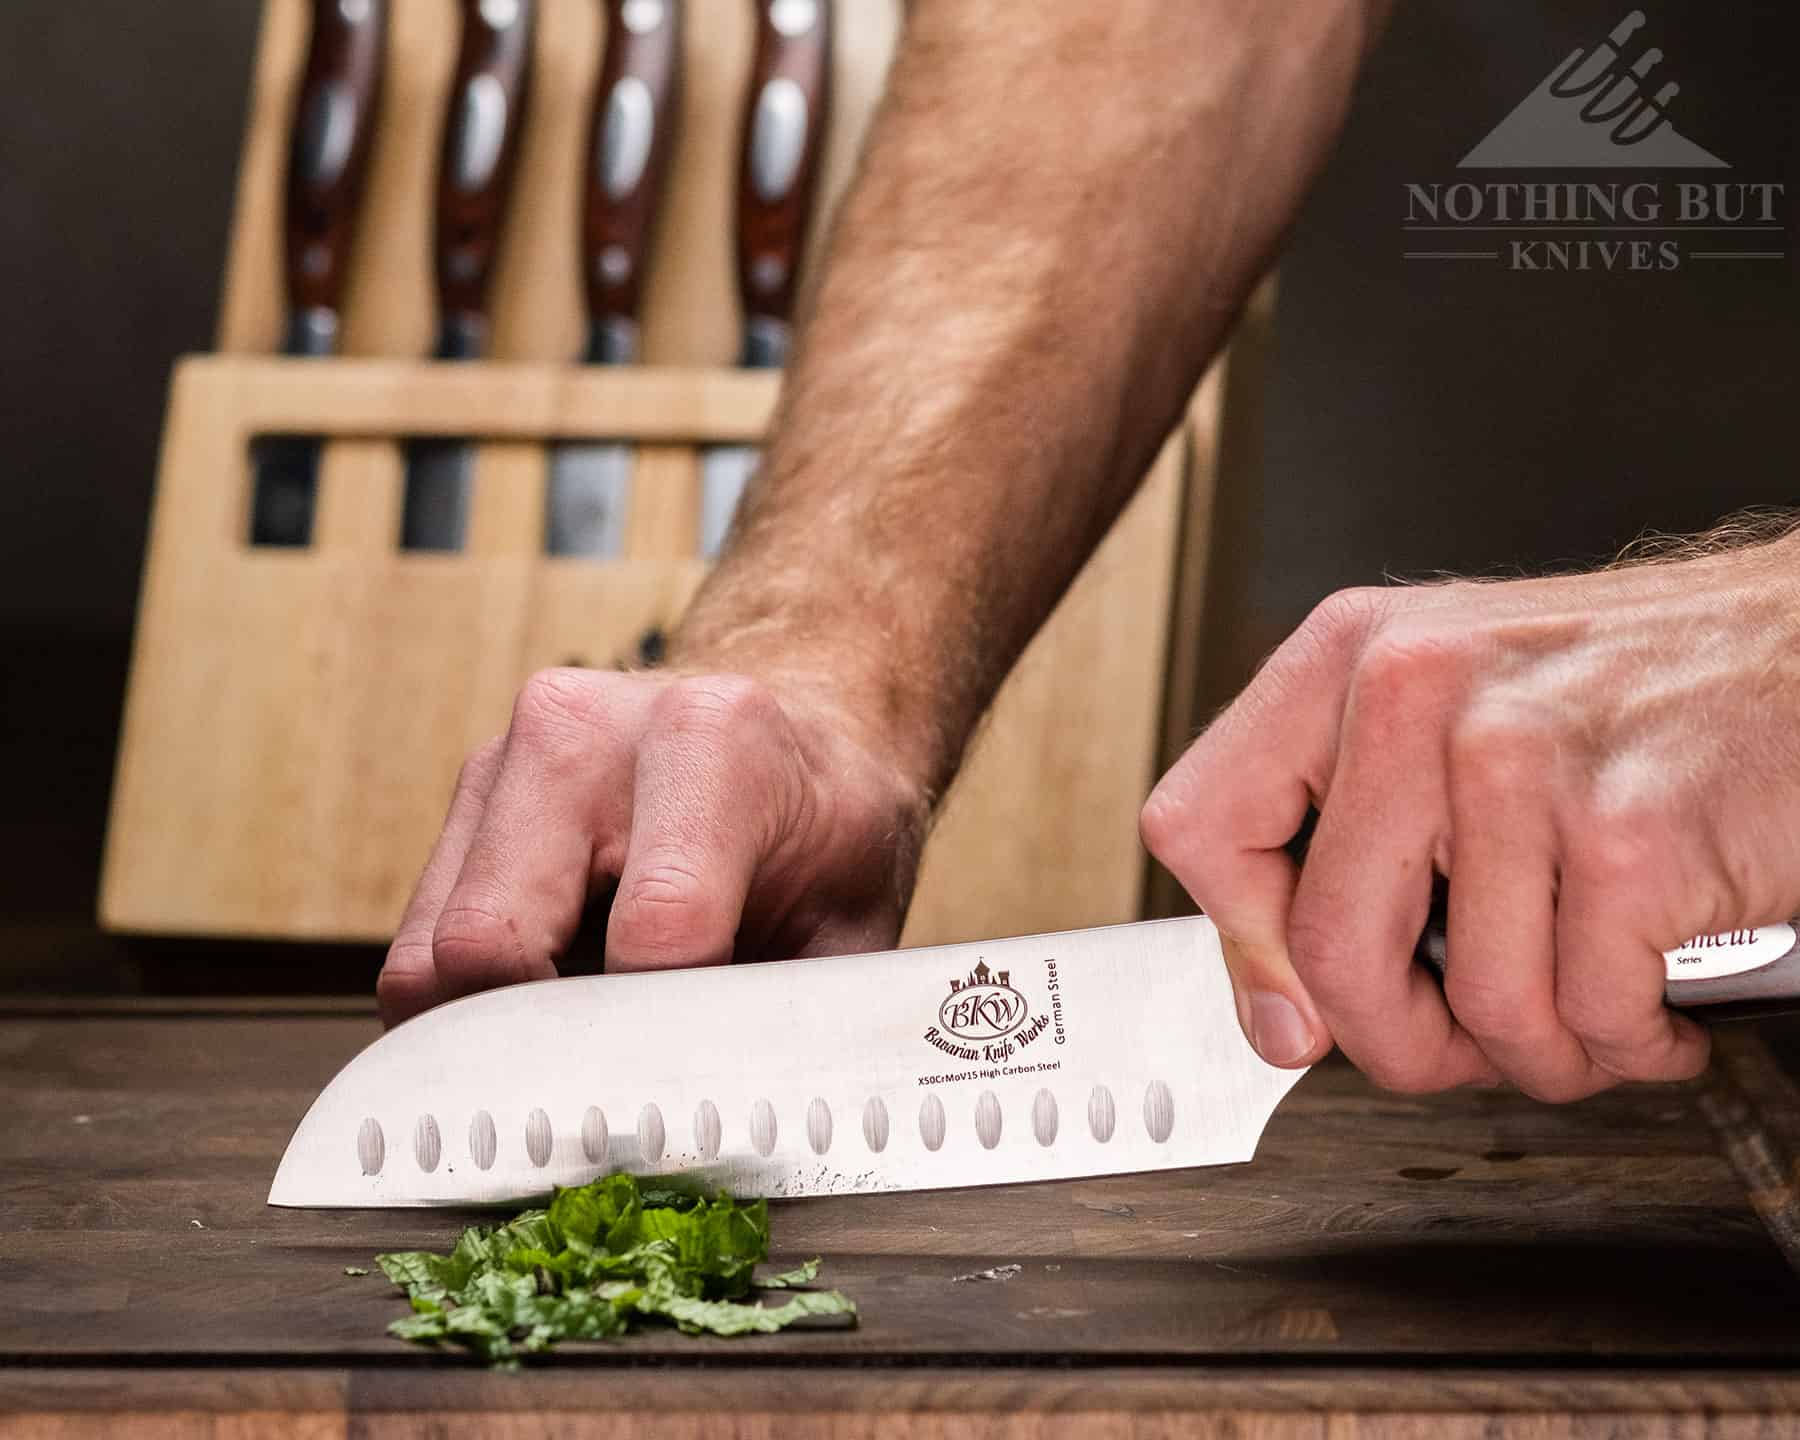 The Bavarian Knife Works Santoku knife is a good option for mincing herbs. 